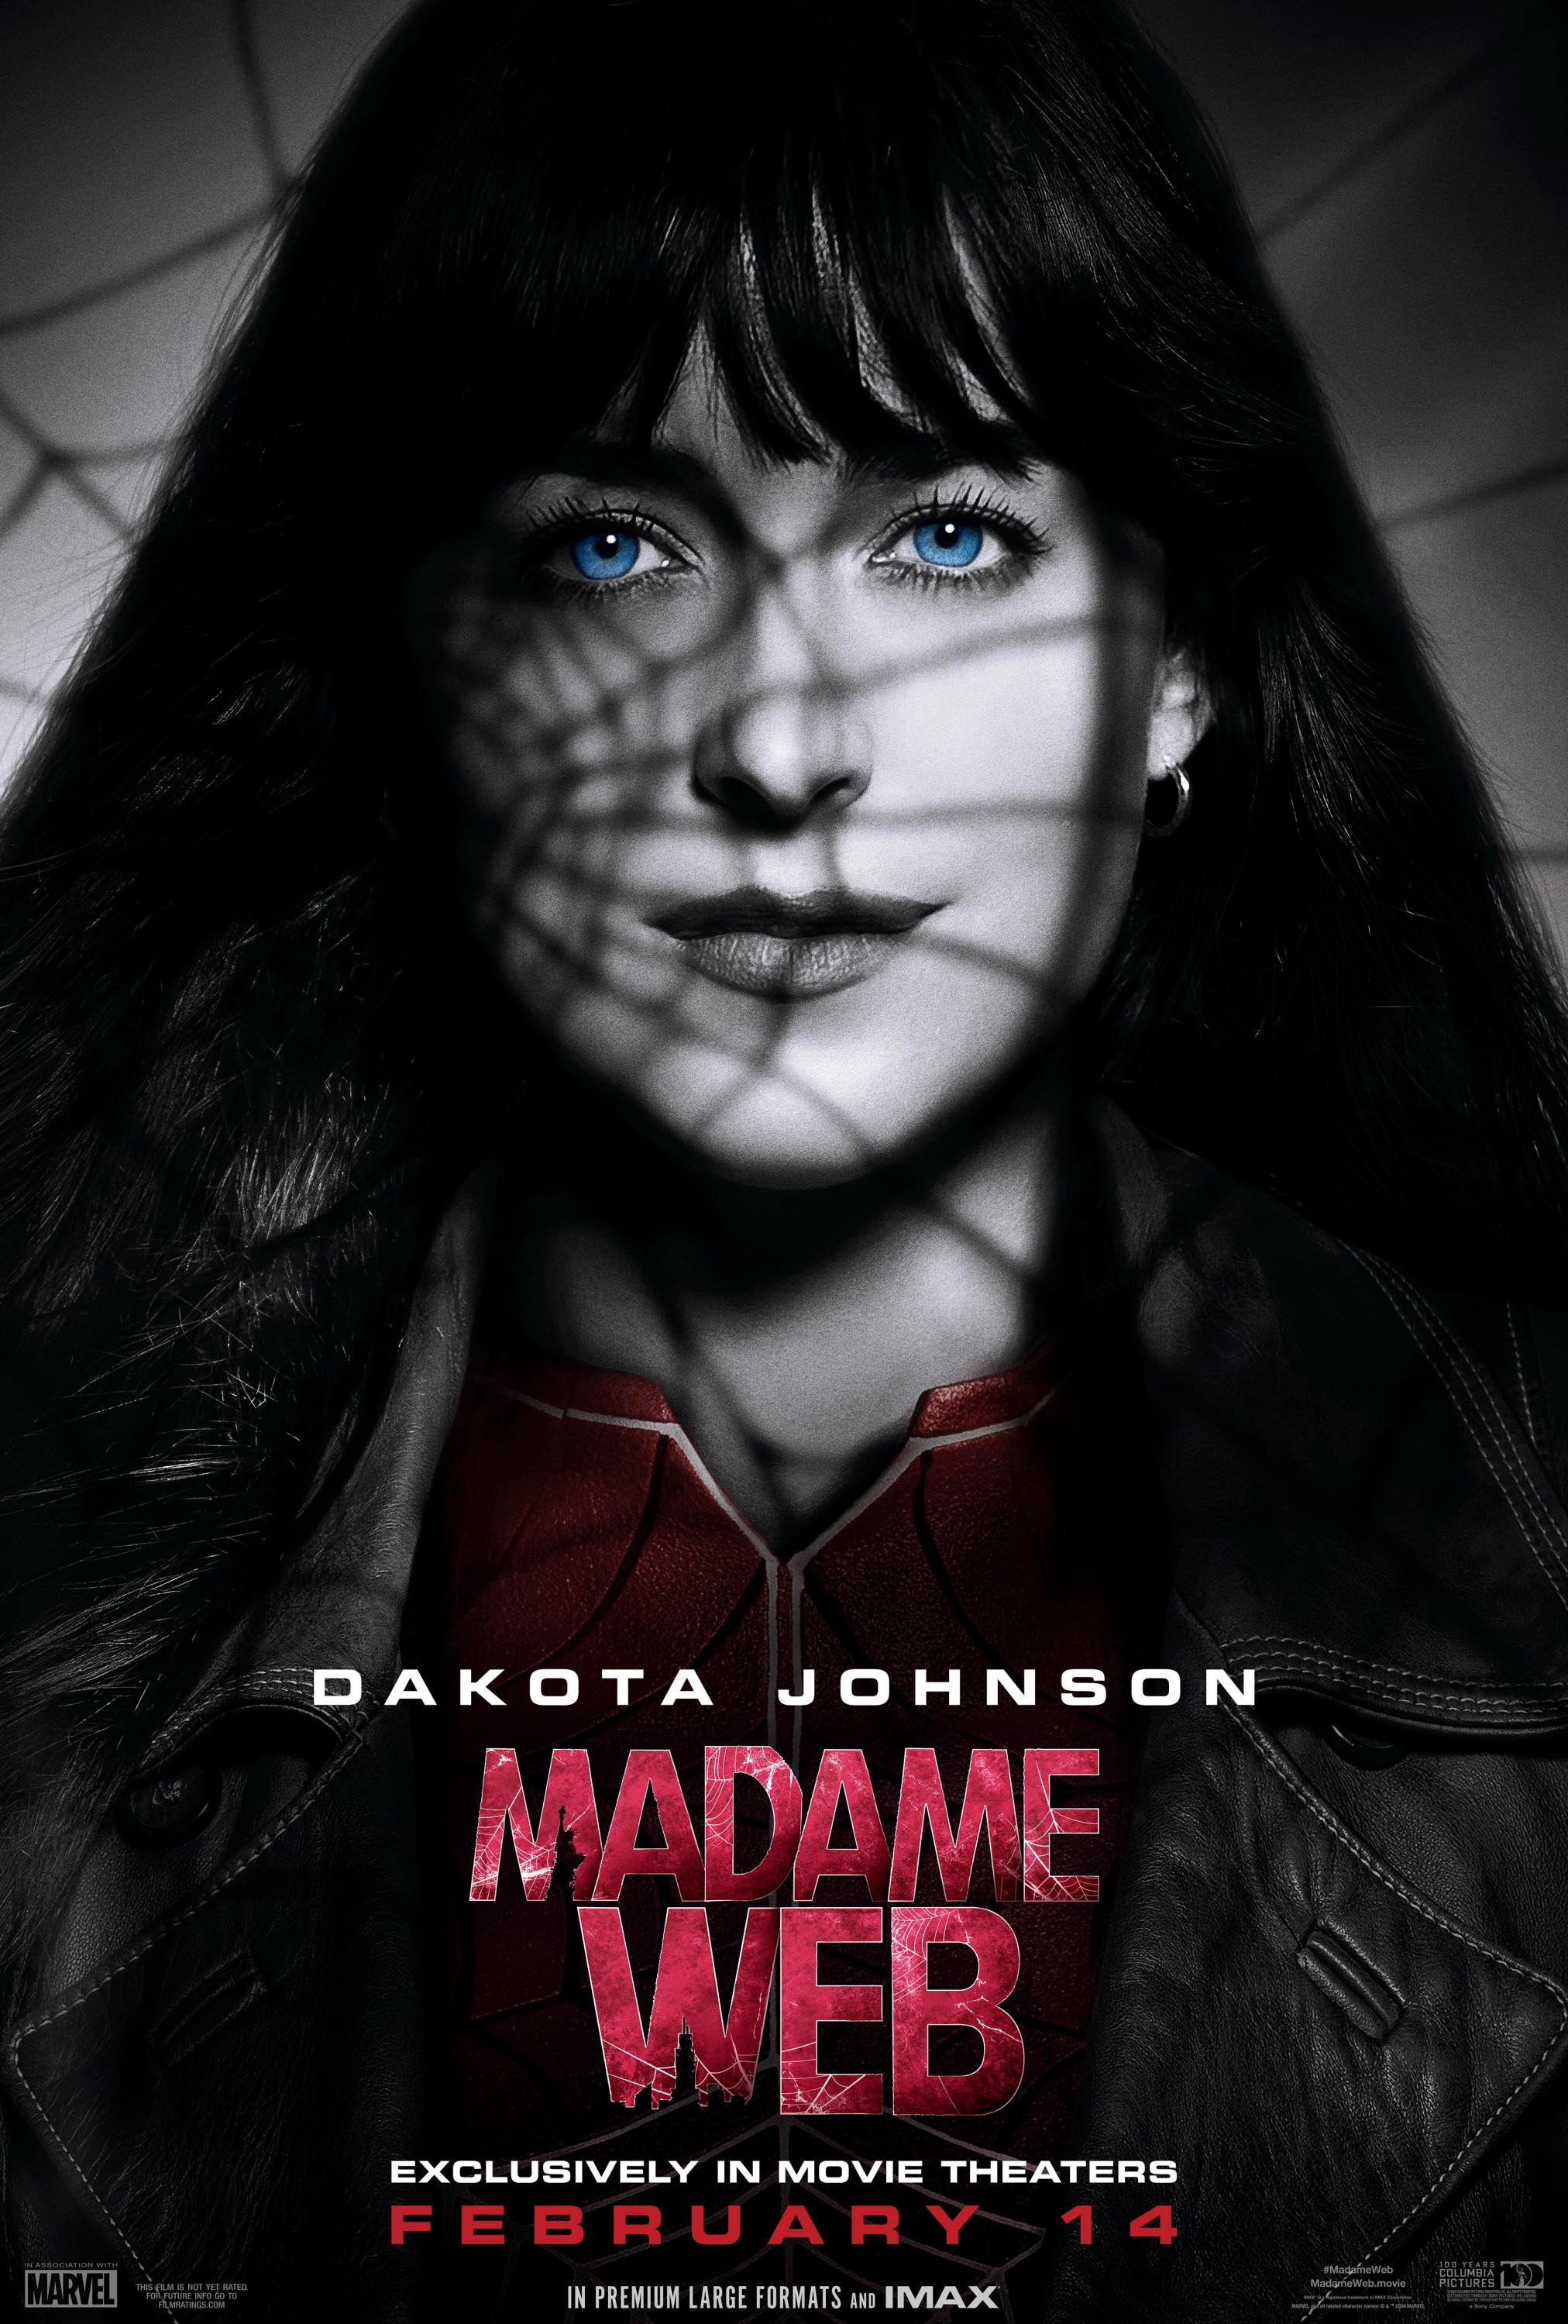 Madame Web, Dakota Johnson